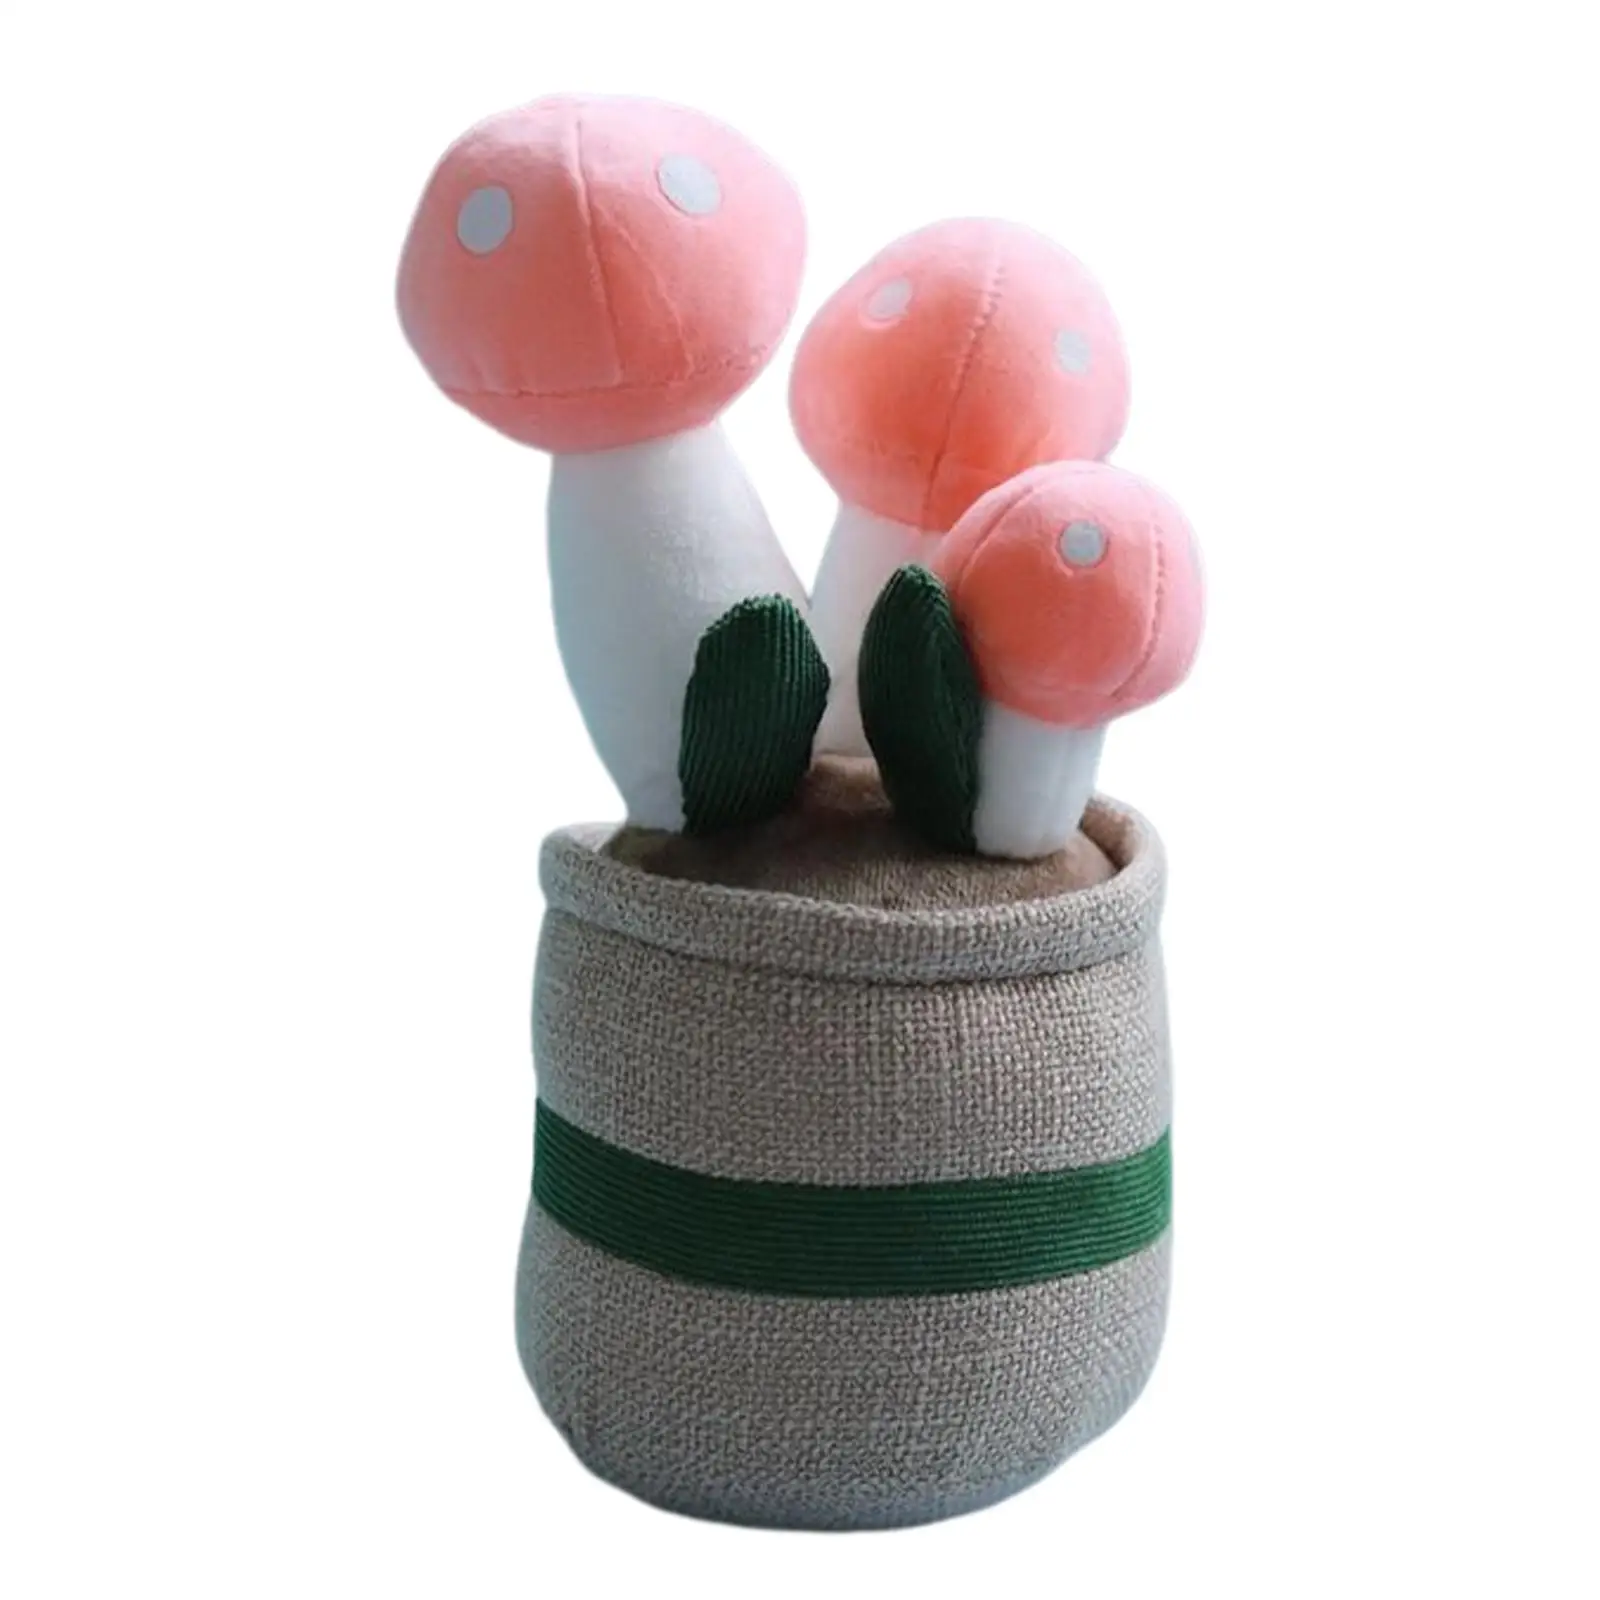 Mushroom Plush Toys Lifelike Soft Hugging Cushion Potted for Tabletop Bedroom Office Friend